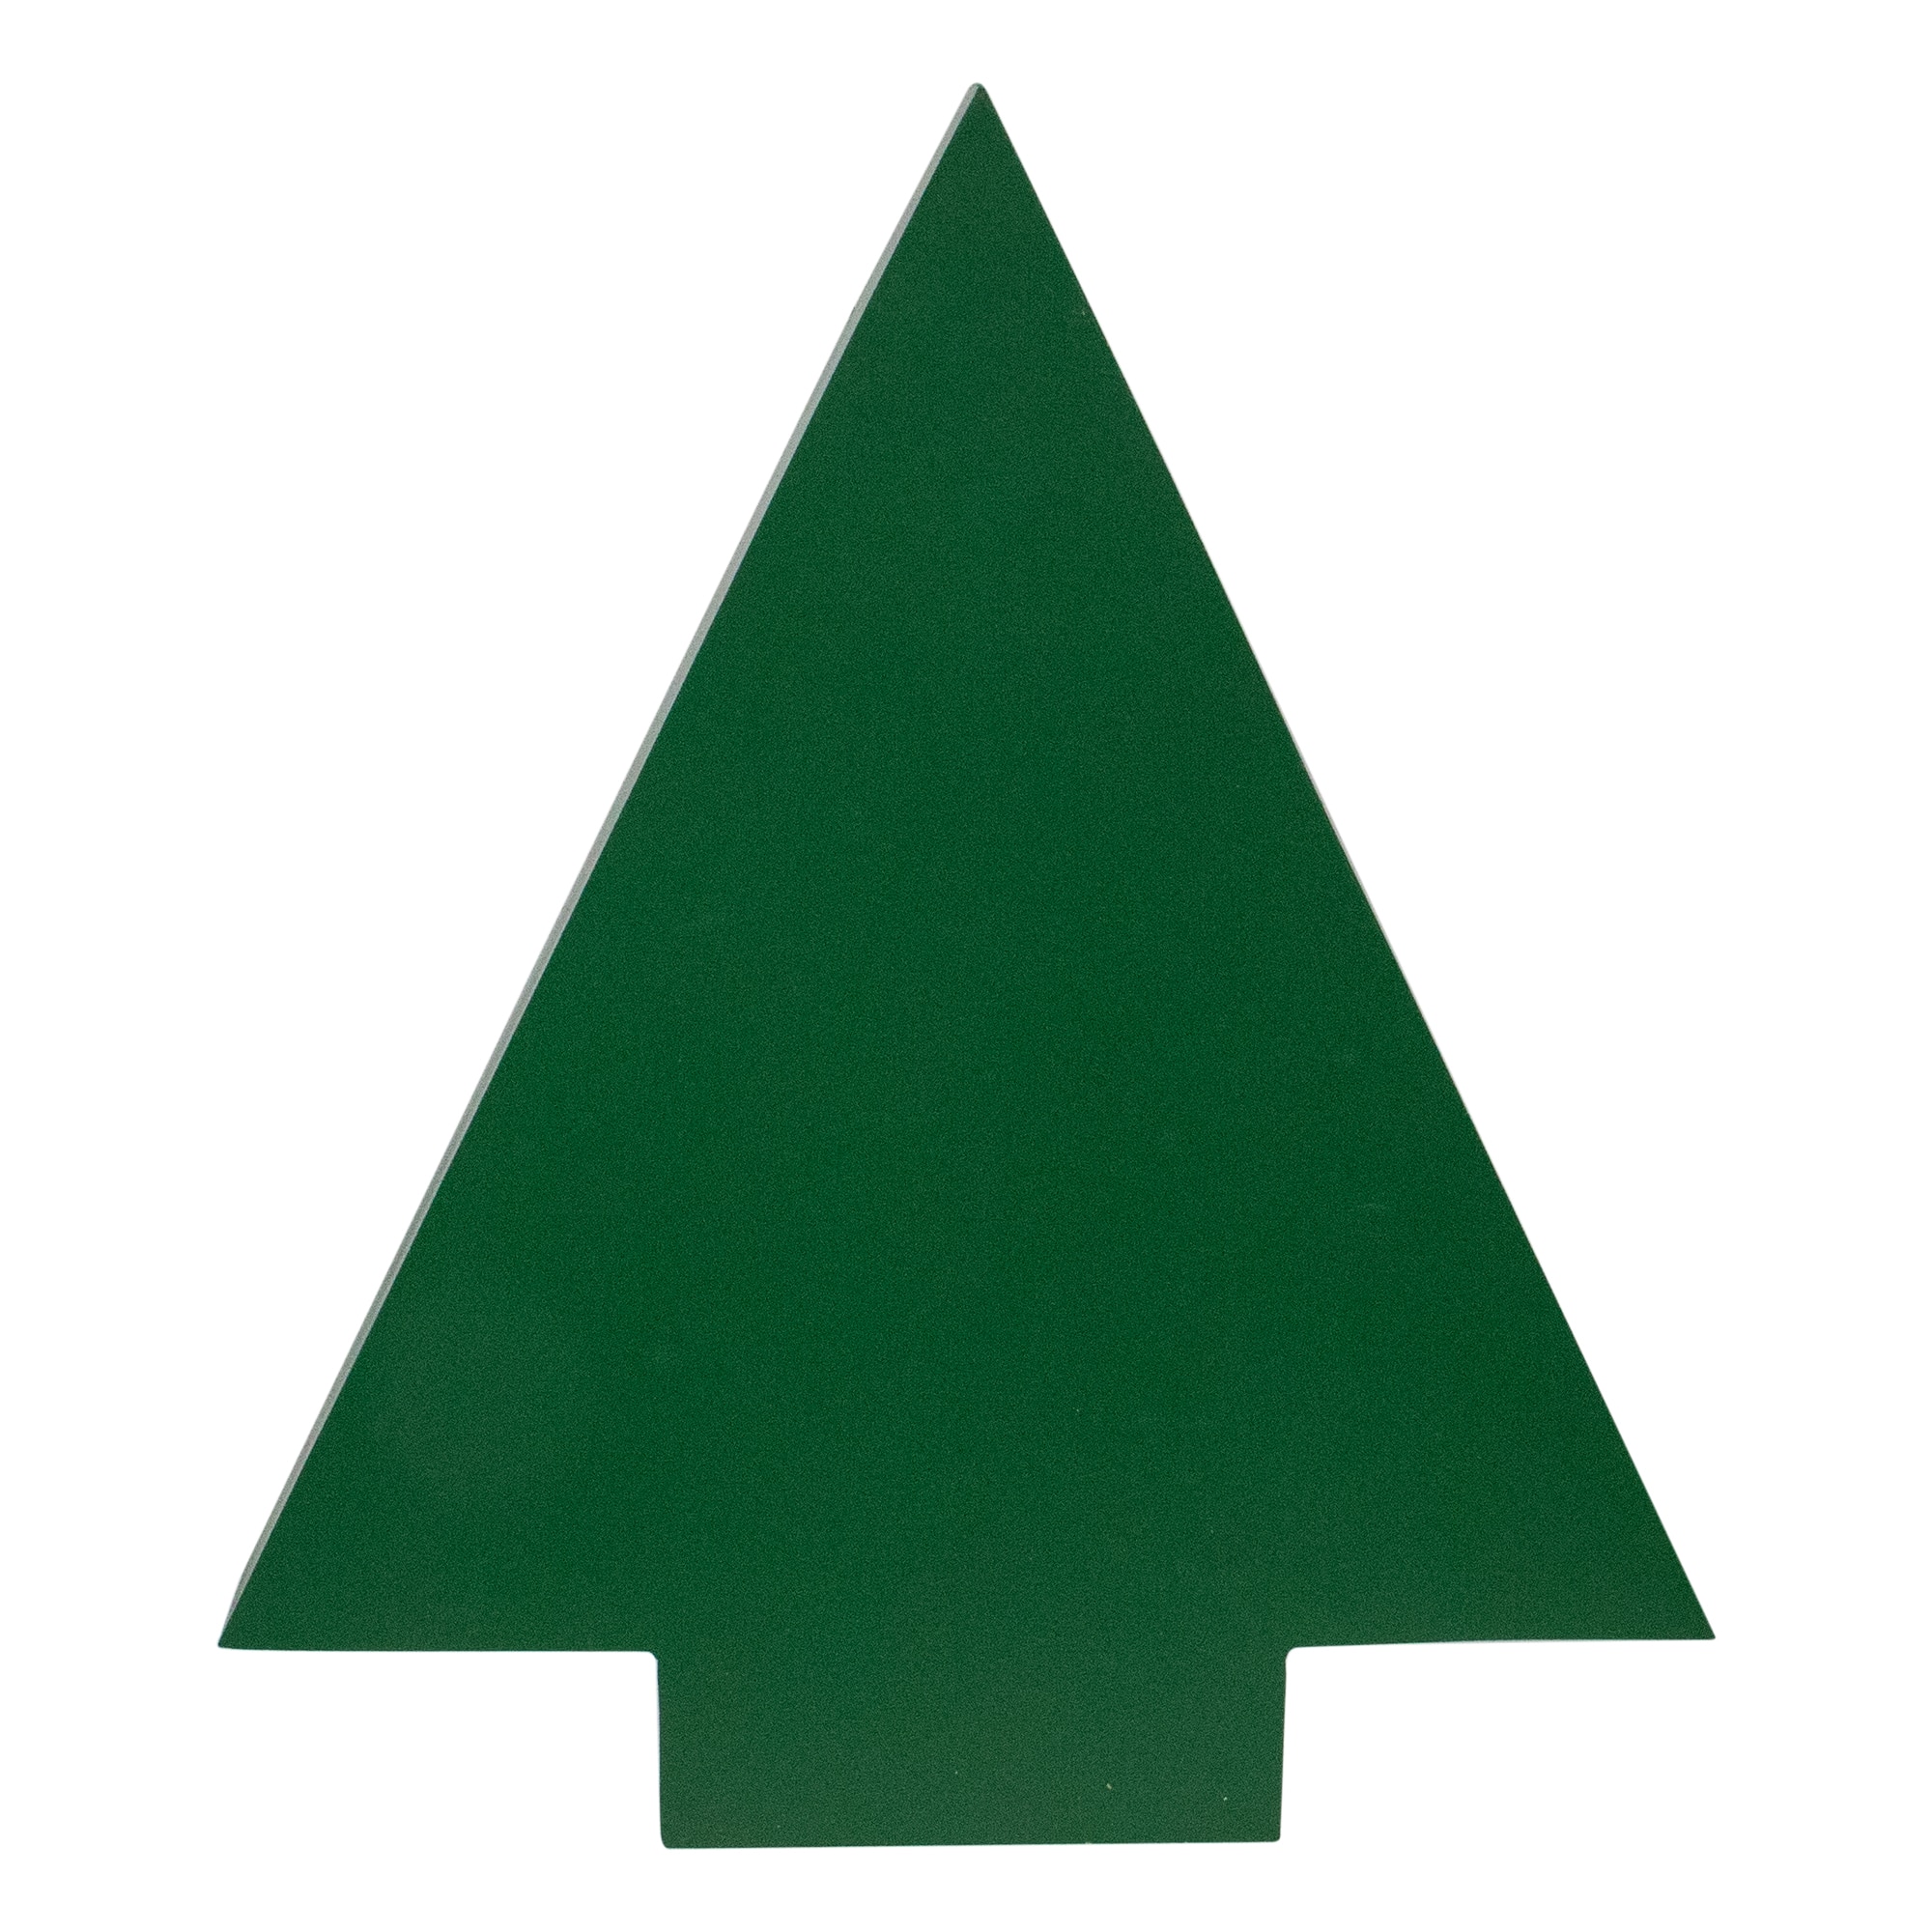 15&#x22; Green Tree Shaped Christmas Advent Calendar Decoration